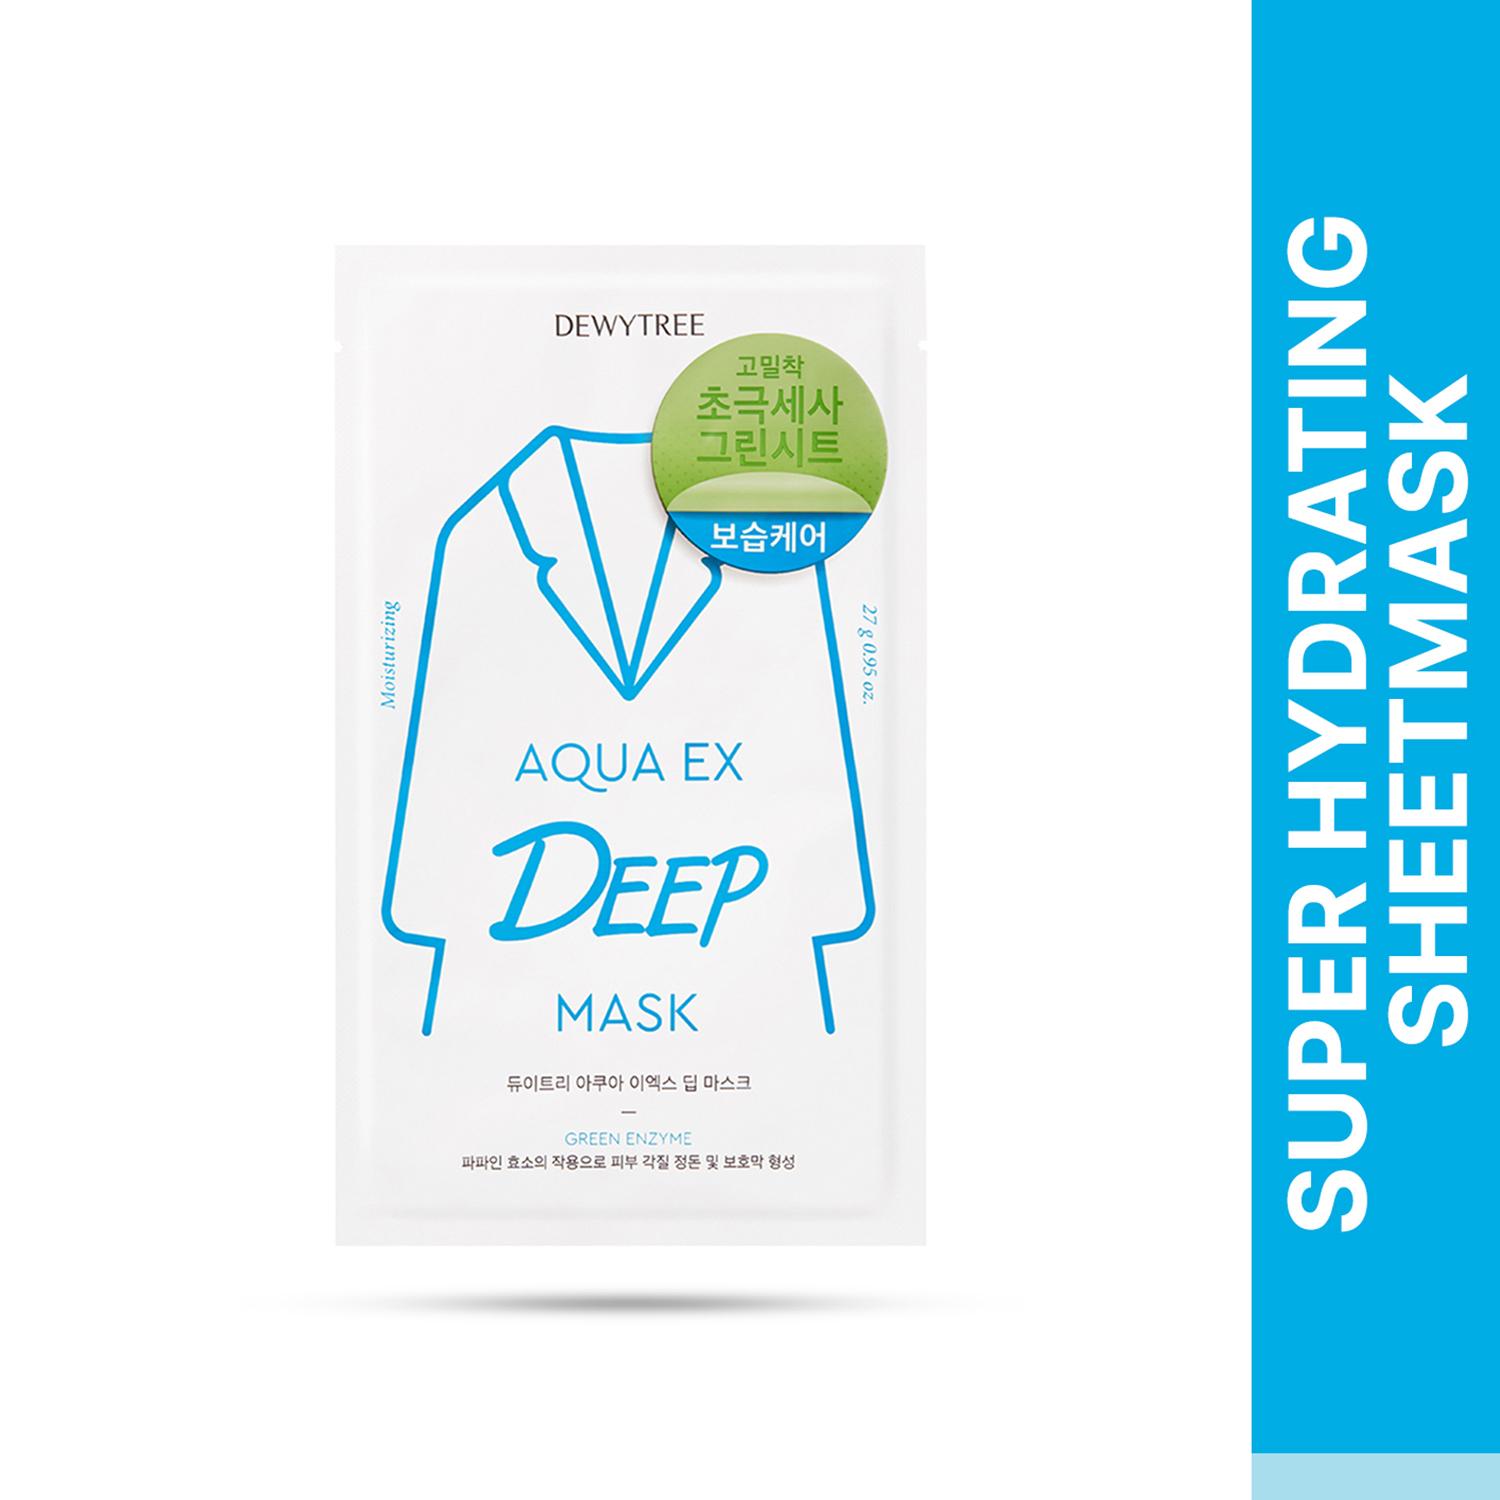 Dewytree Aqua Ex Deep Sheet Mask (27g)